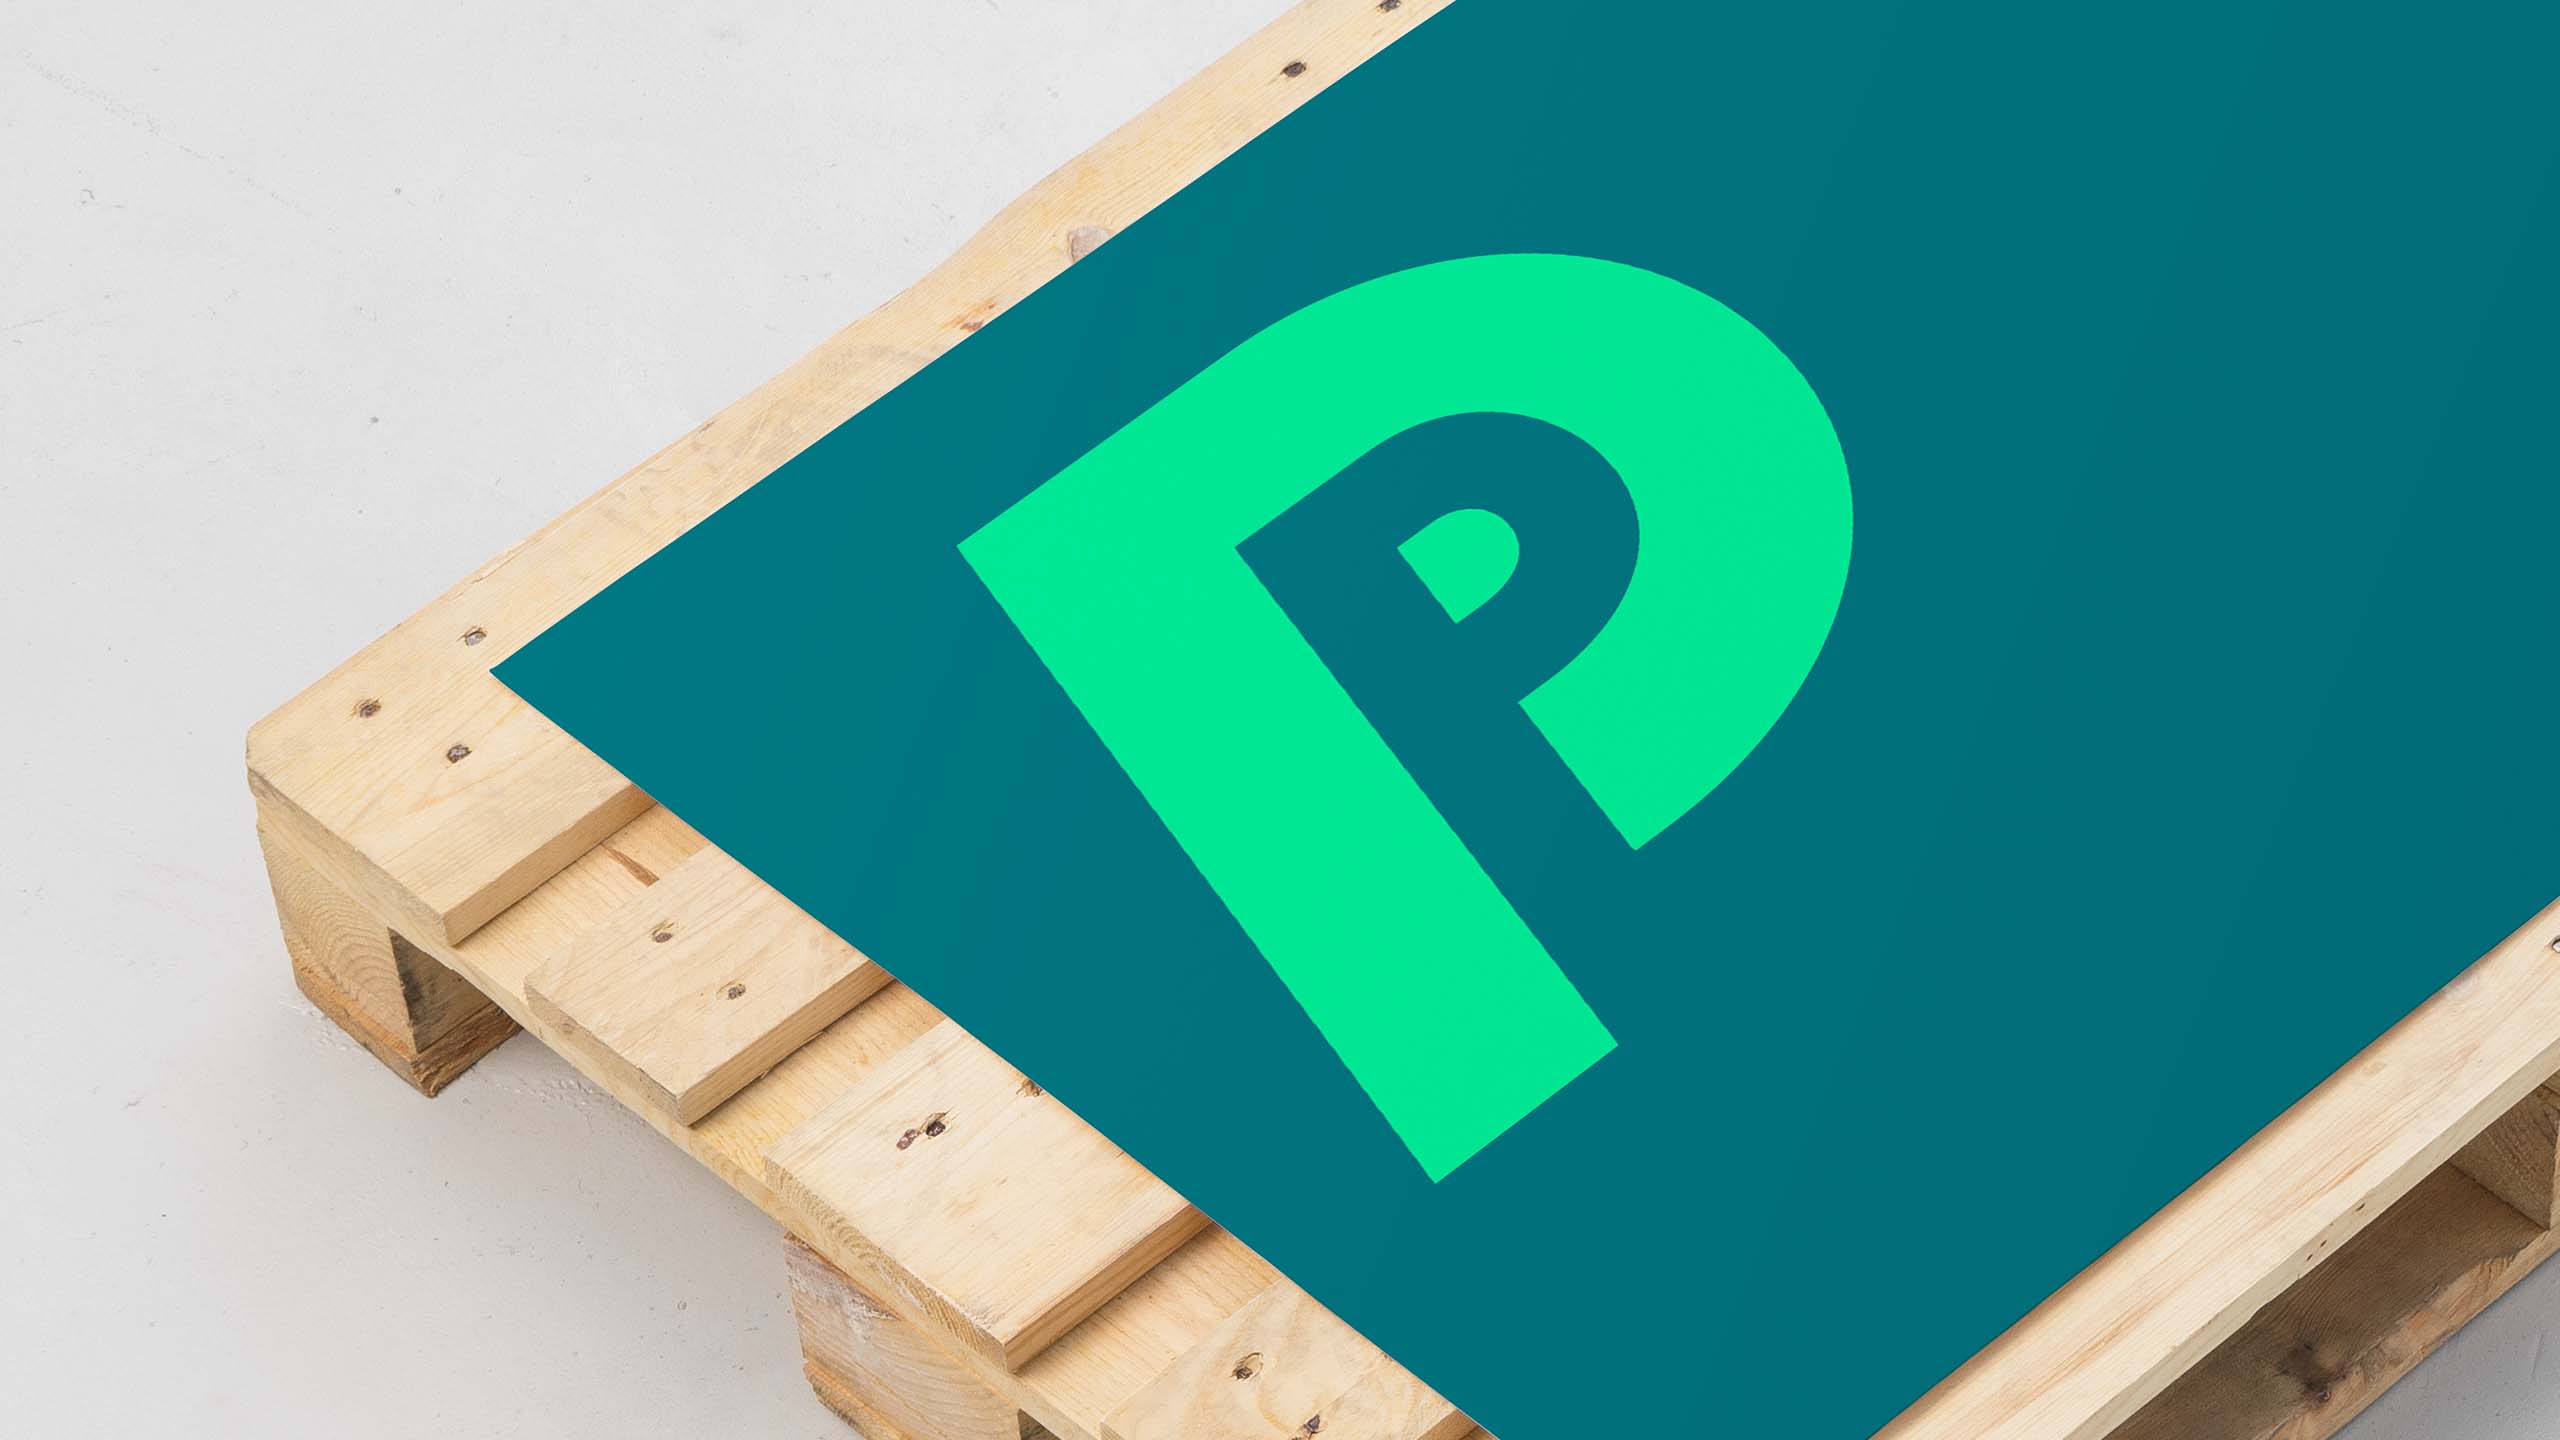 Parex Personalpartner logo on a pallet